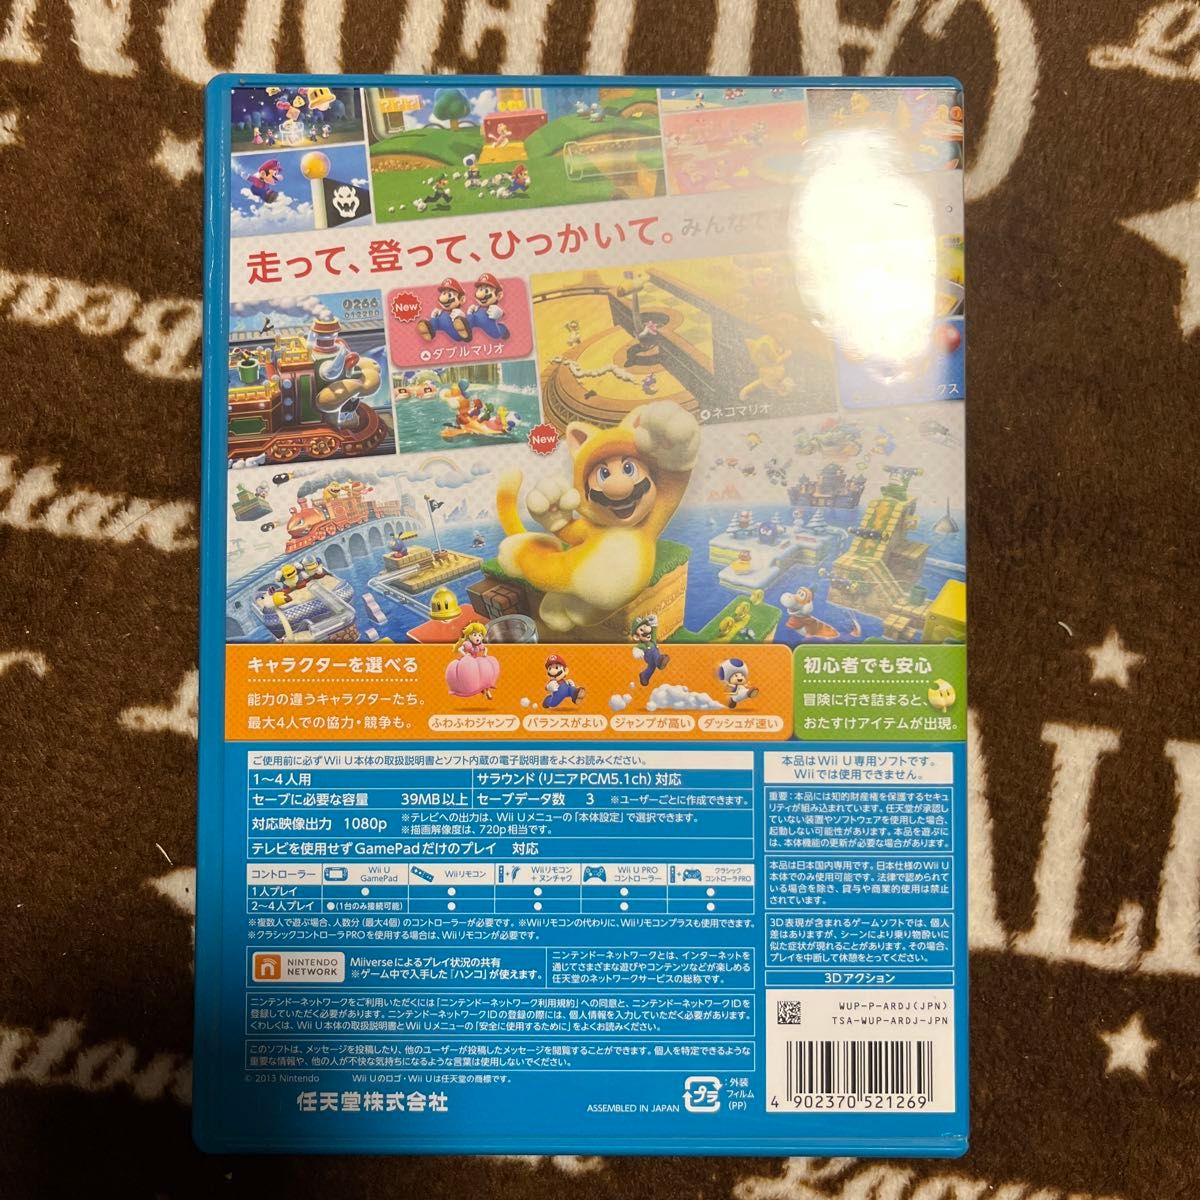 【Wii U】 スーパーマリオ 3Dワールド